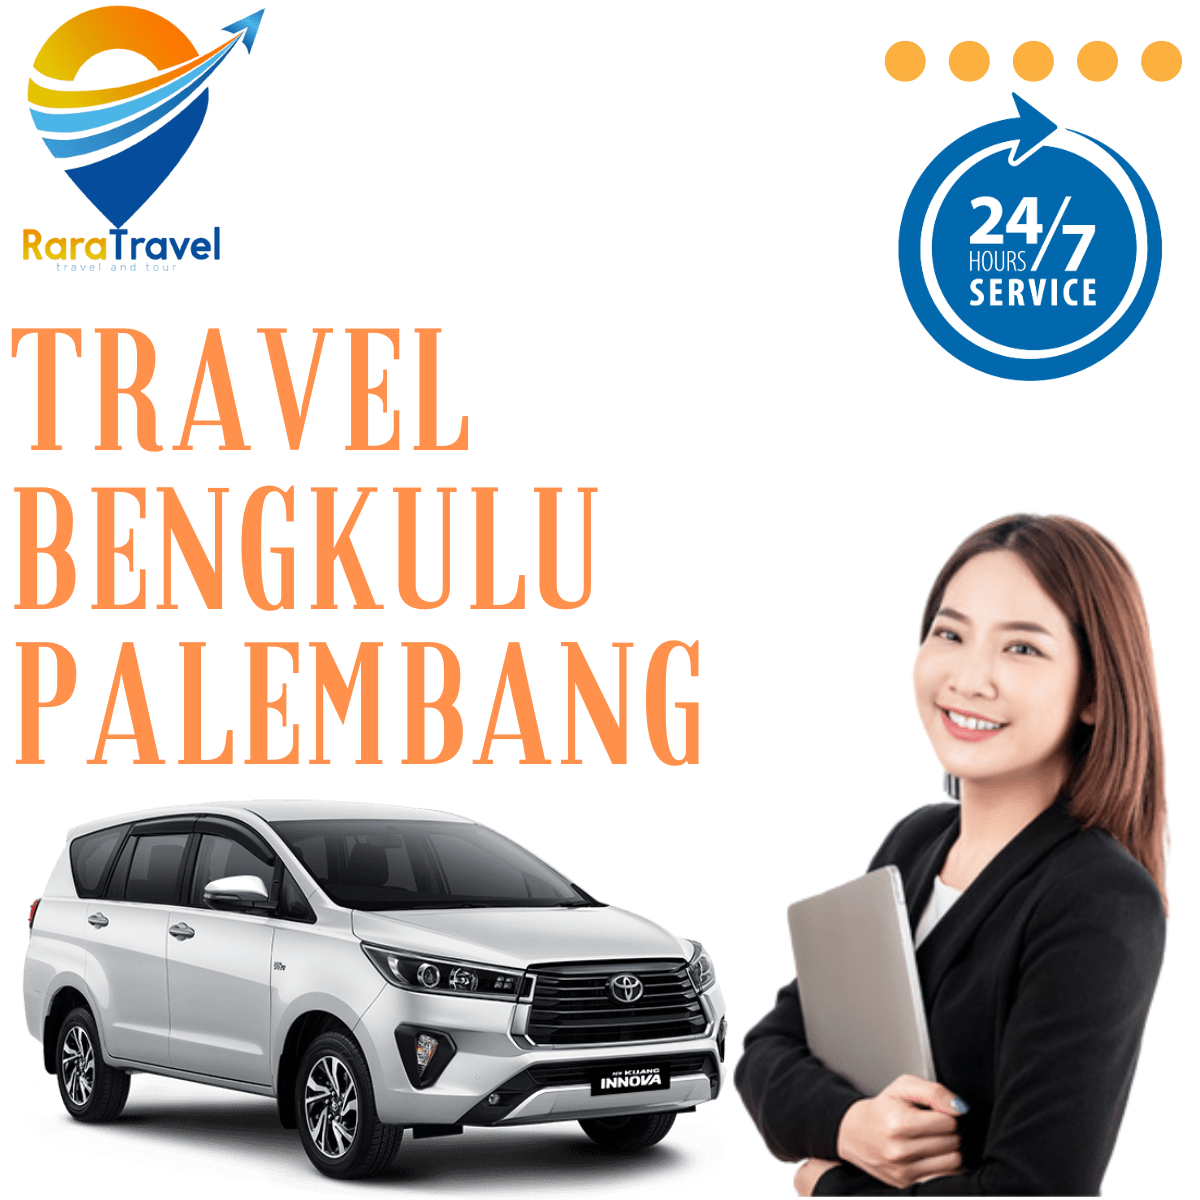 Travel Bengkulu Palembang Hiace Harga Tiket Murah